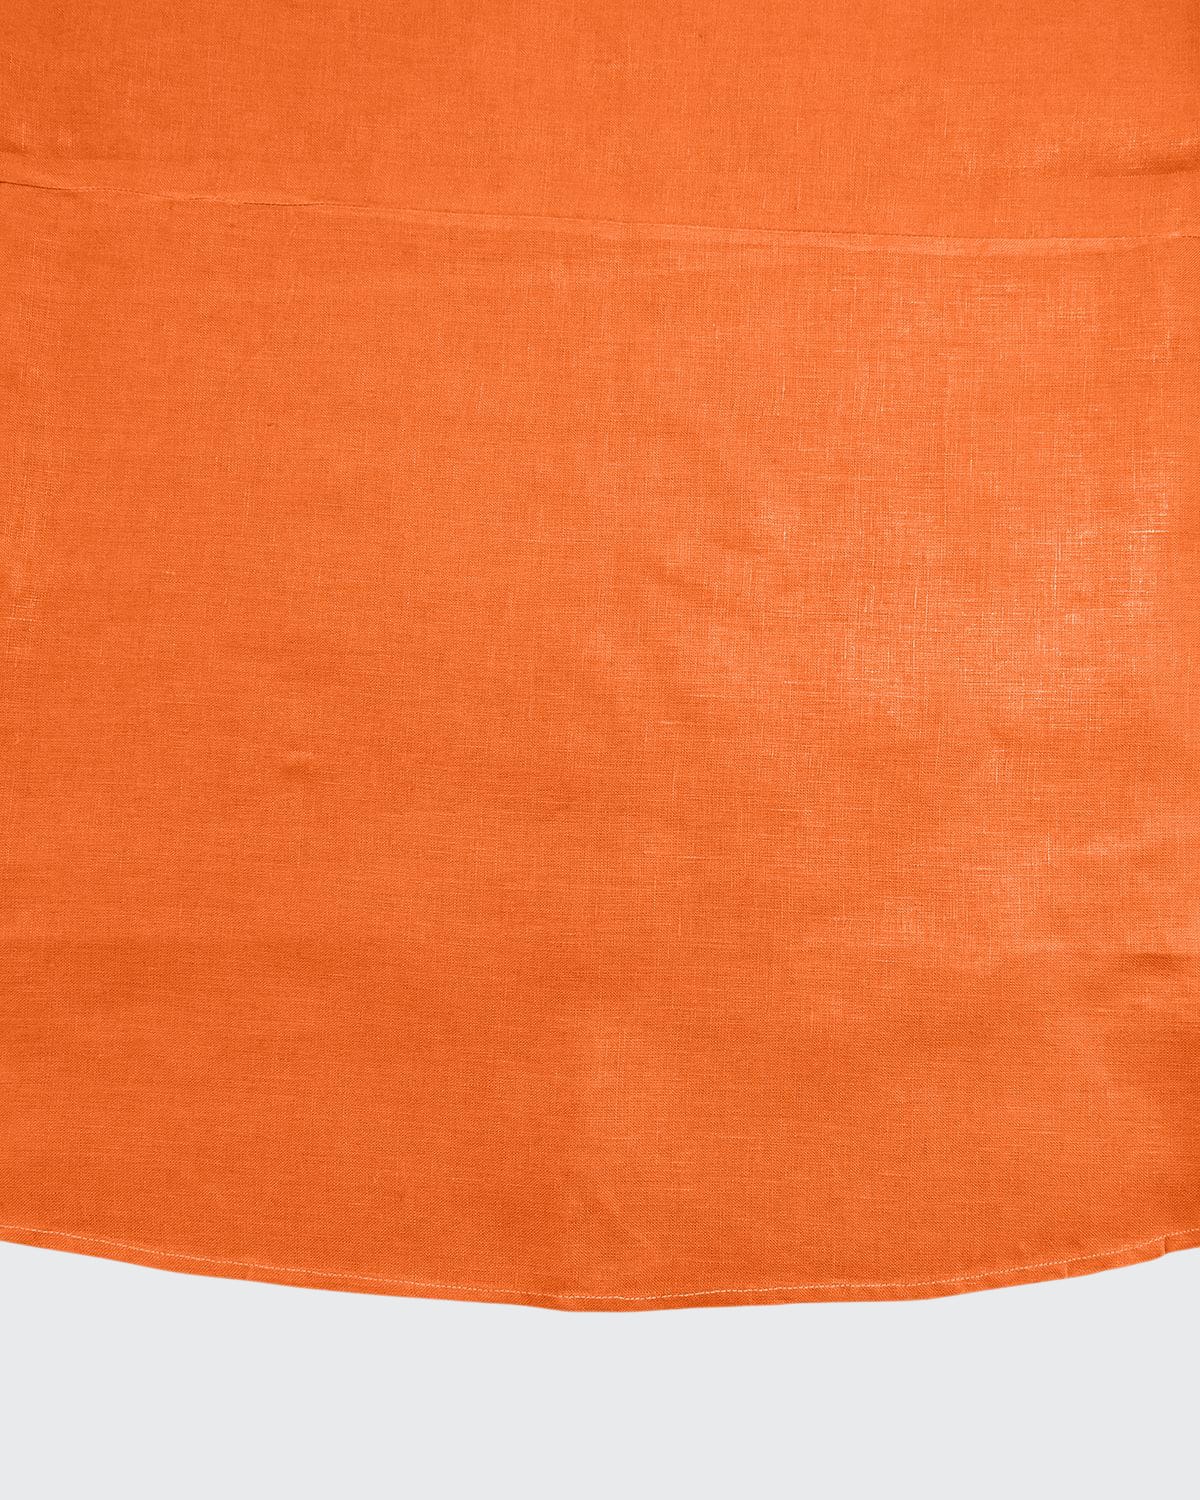 Sferra Hemstitch Round Tablecloth, 90"dia. In Tangerine